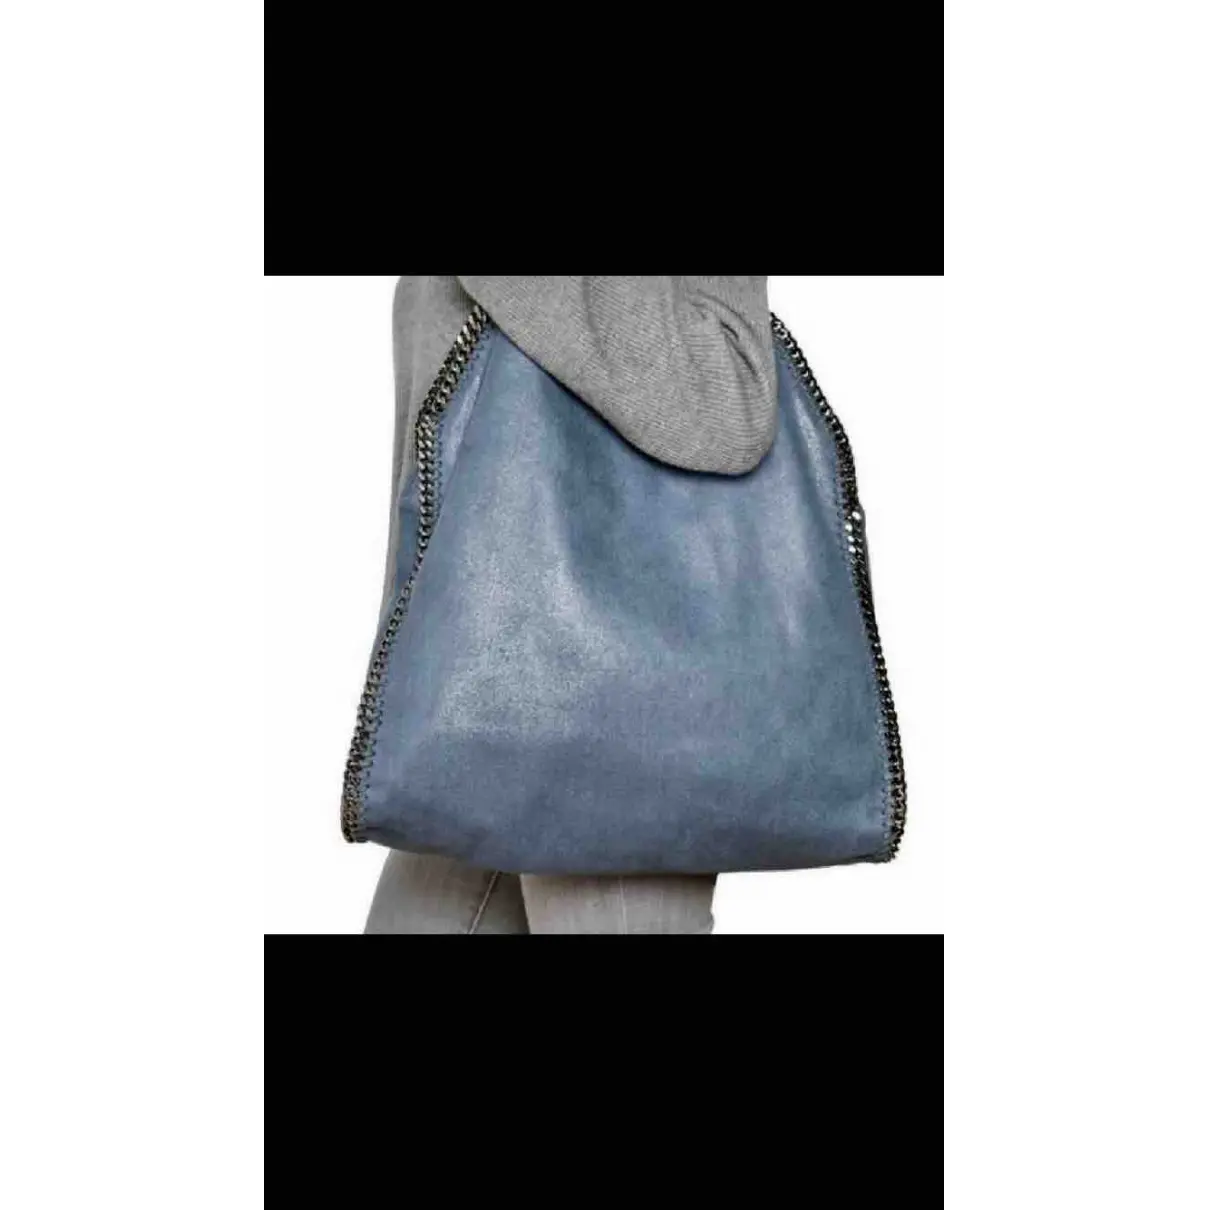 Buy Stella McCartney Falabella handbag online